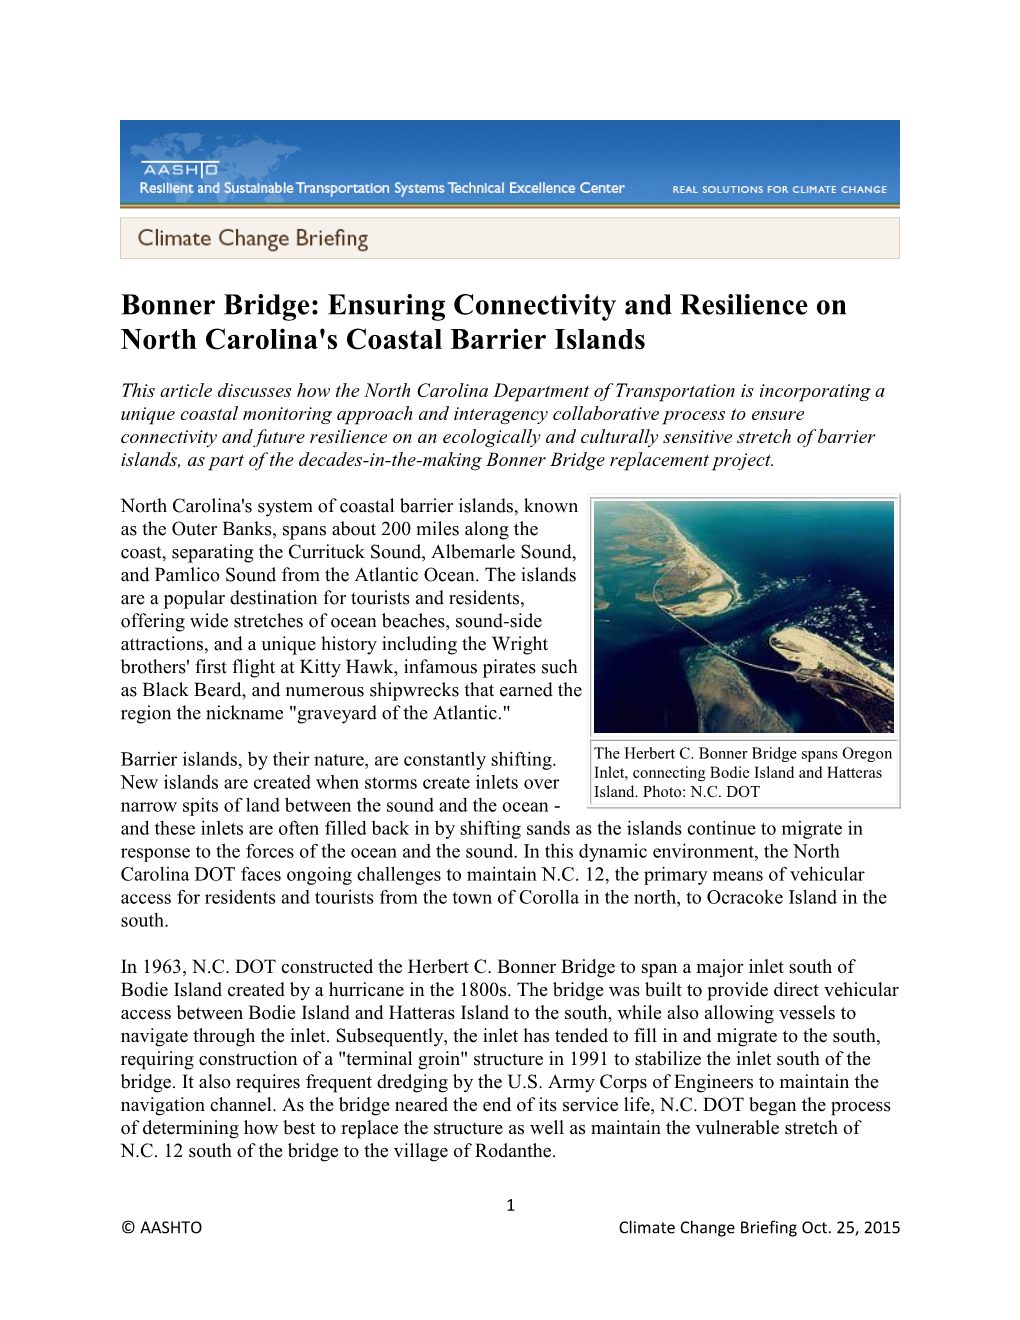 Bonner Bridge: Ensuring Connectivity and Resilience on North Carolina's Coastal Barrier Islands